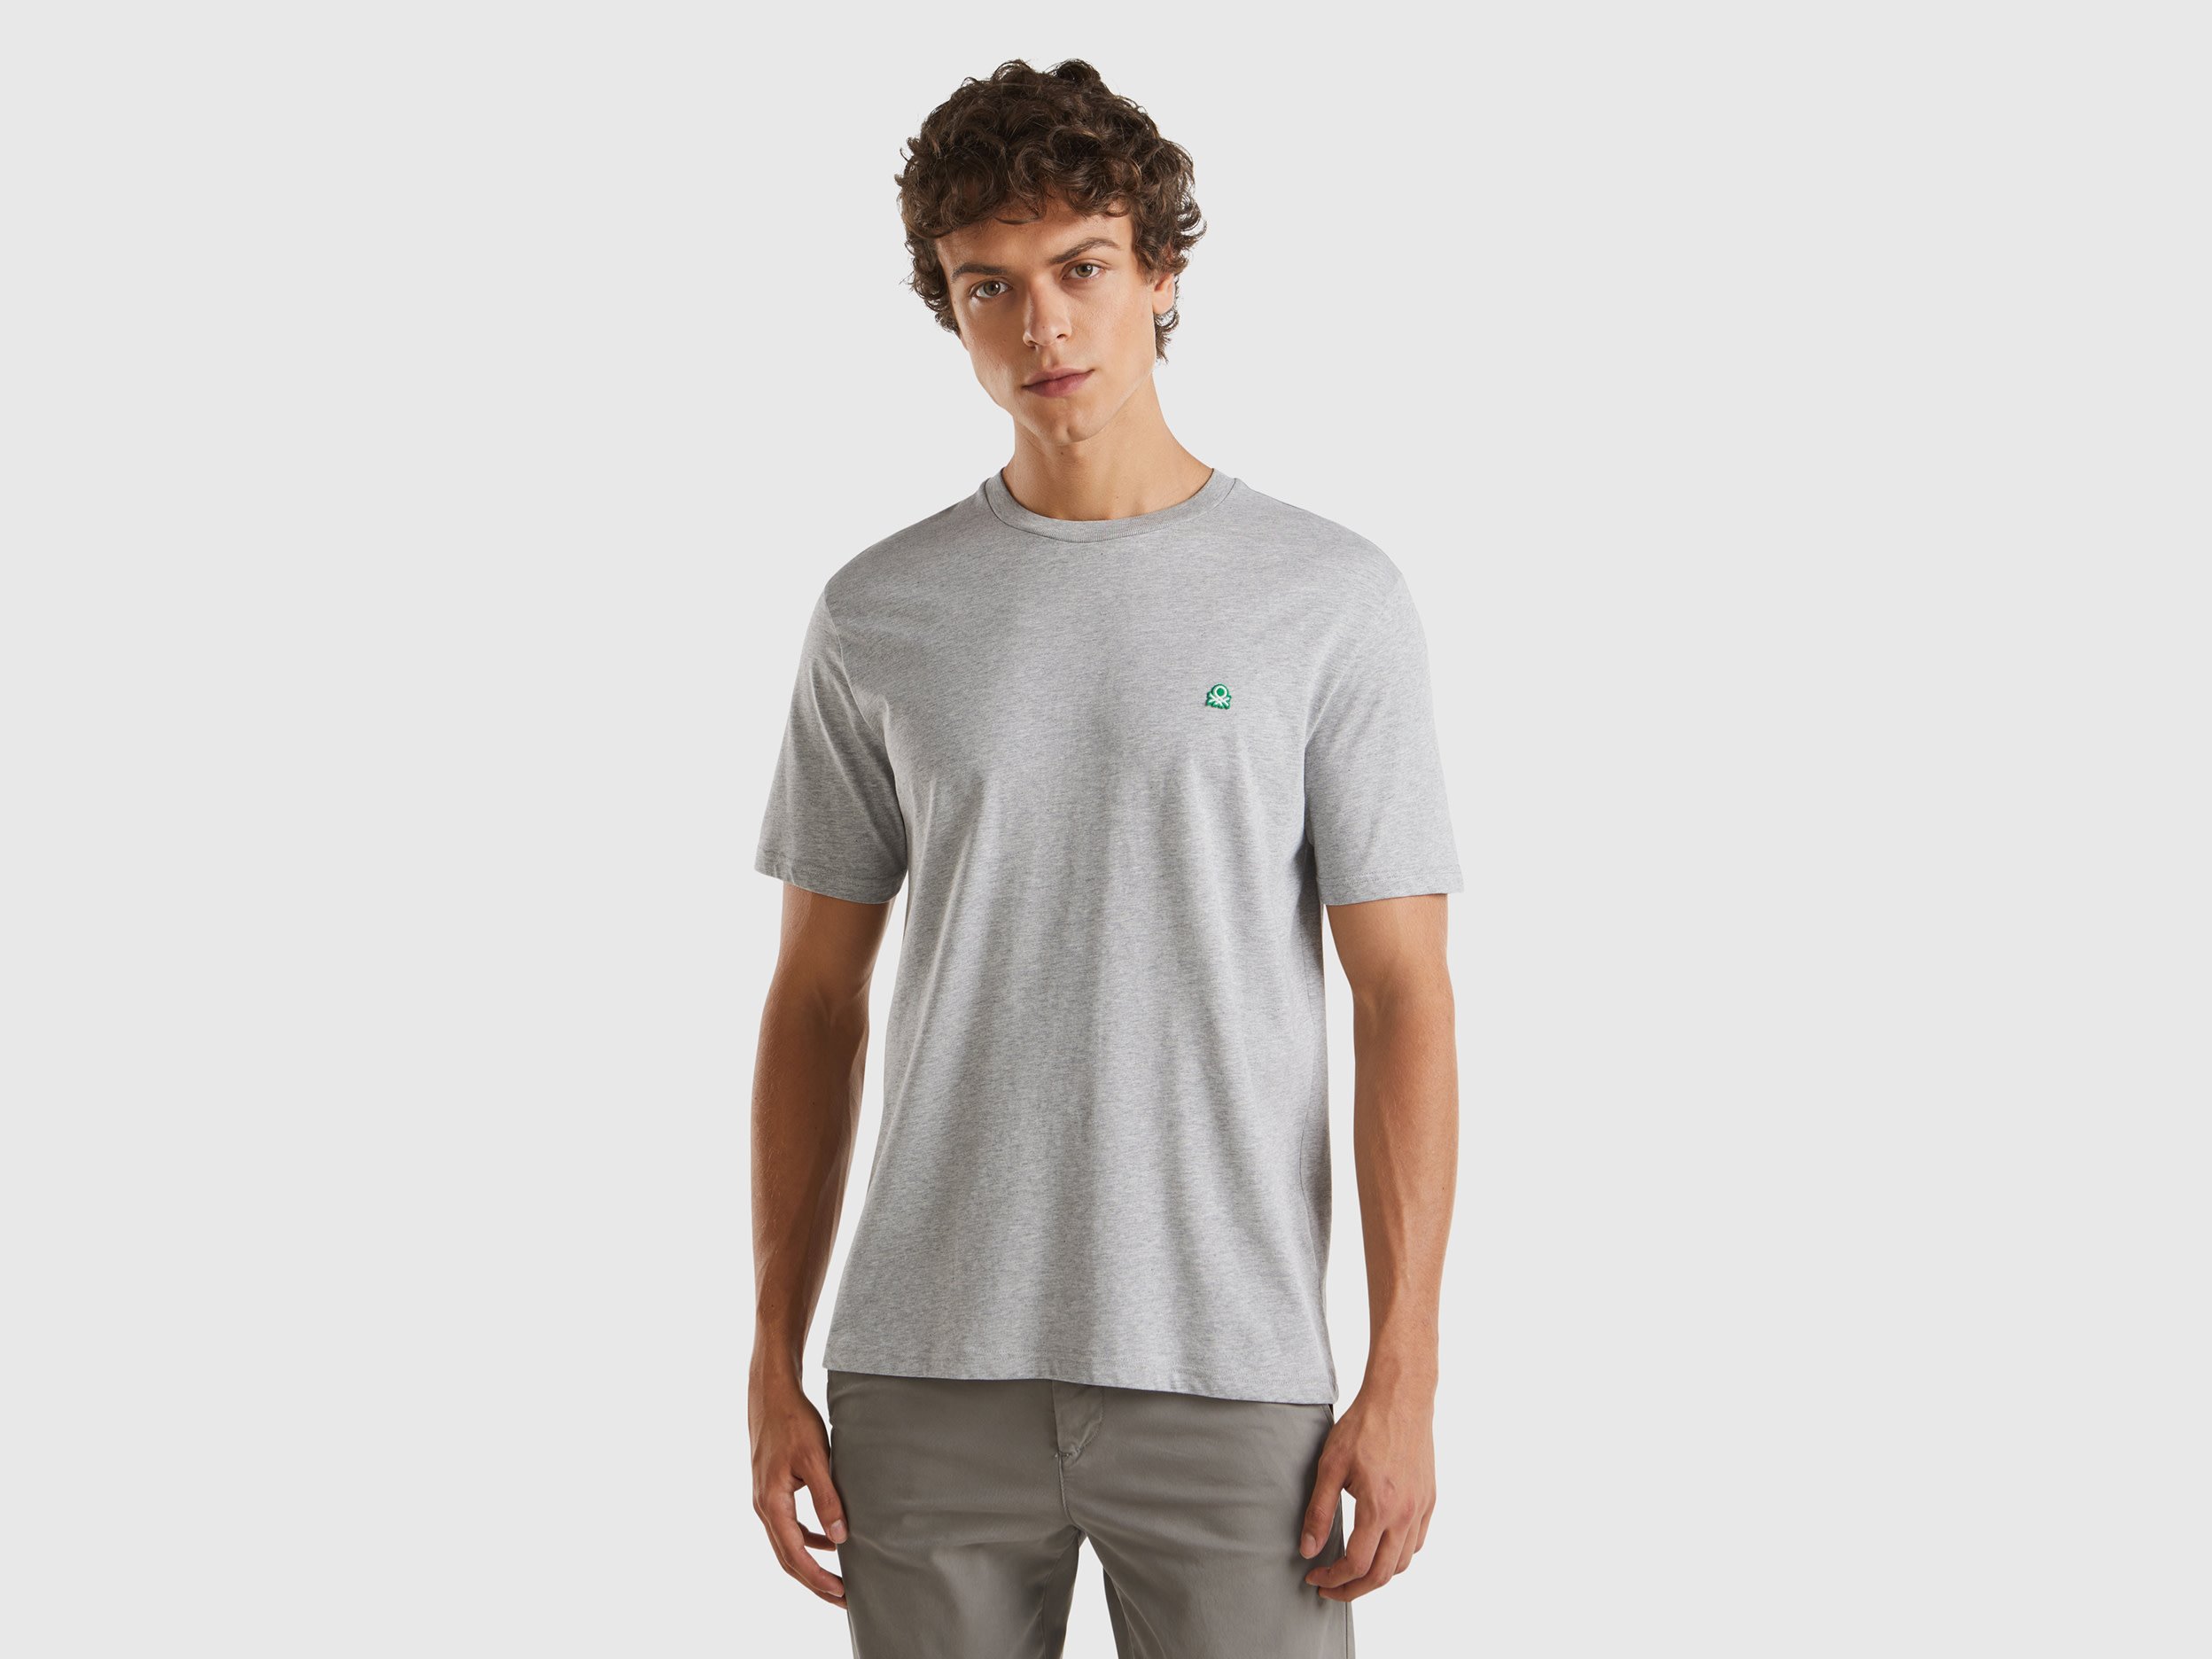 Image of Benetton, 100% Organic Cotton Basic T-shirt, size XXXL, Light Gray, Men